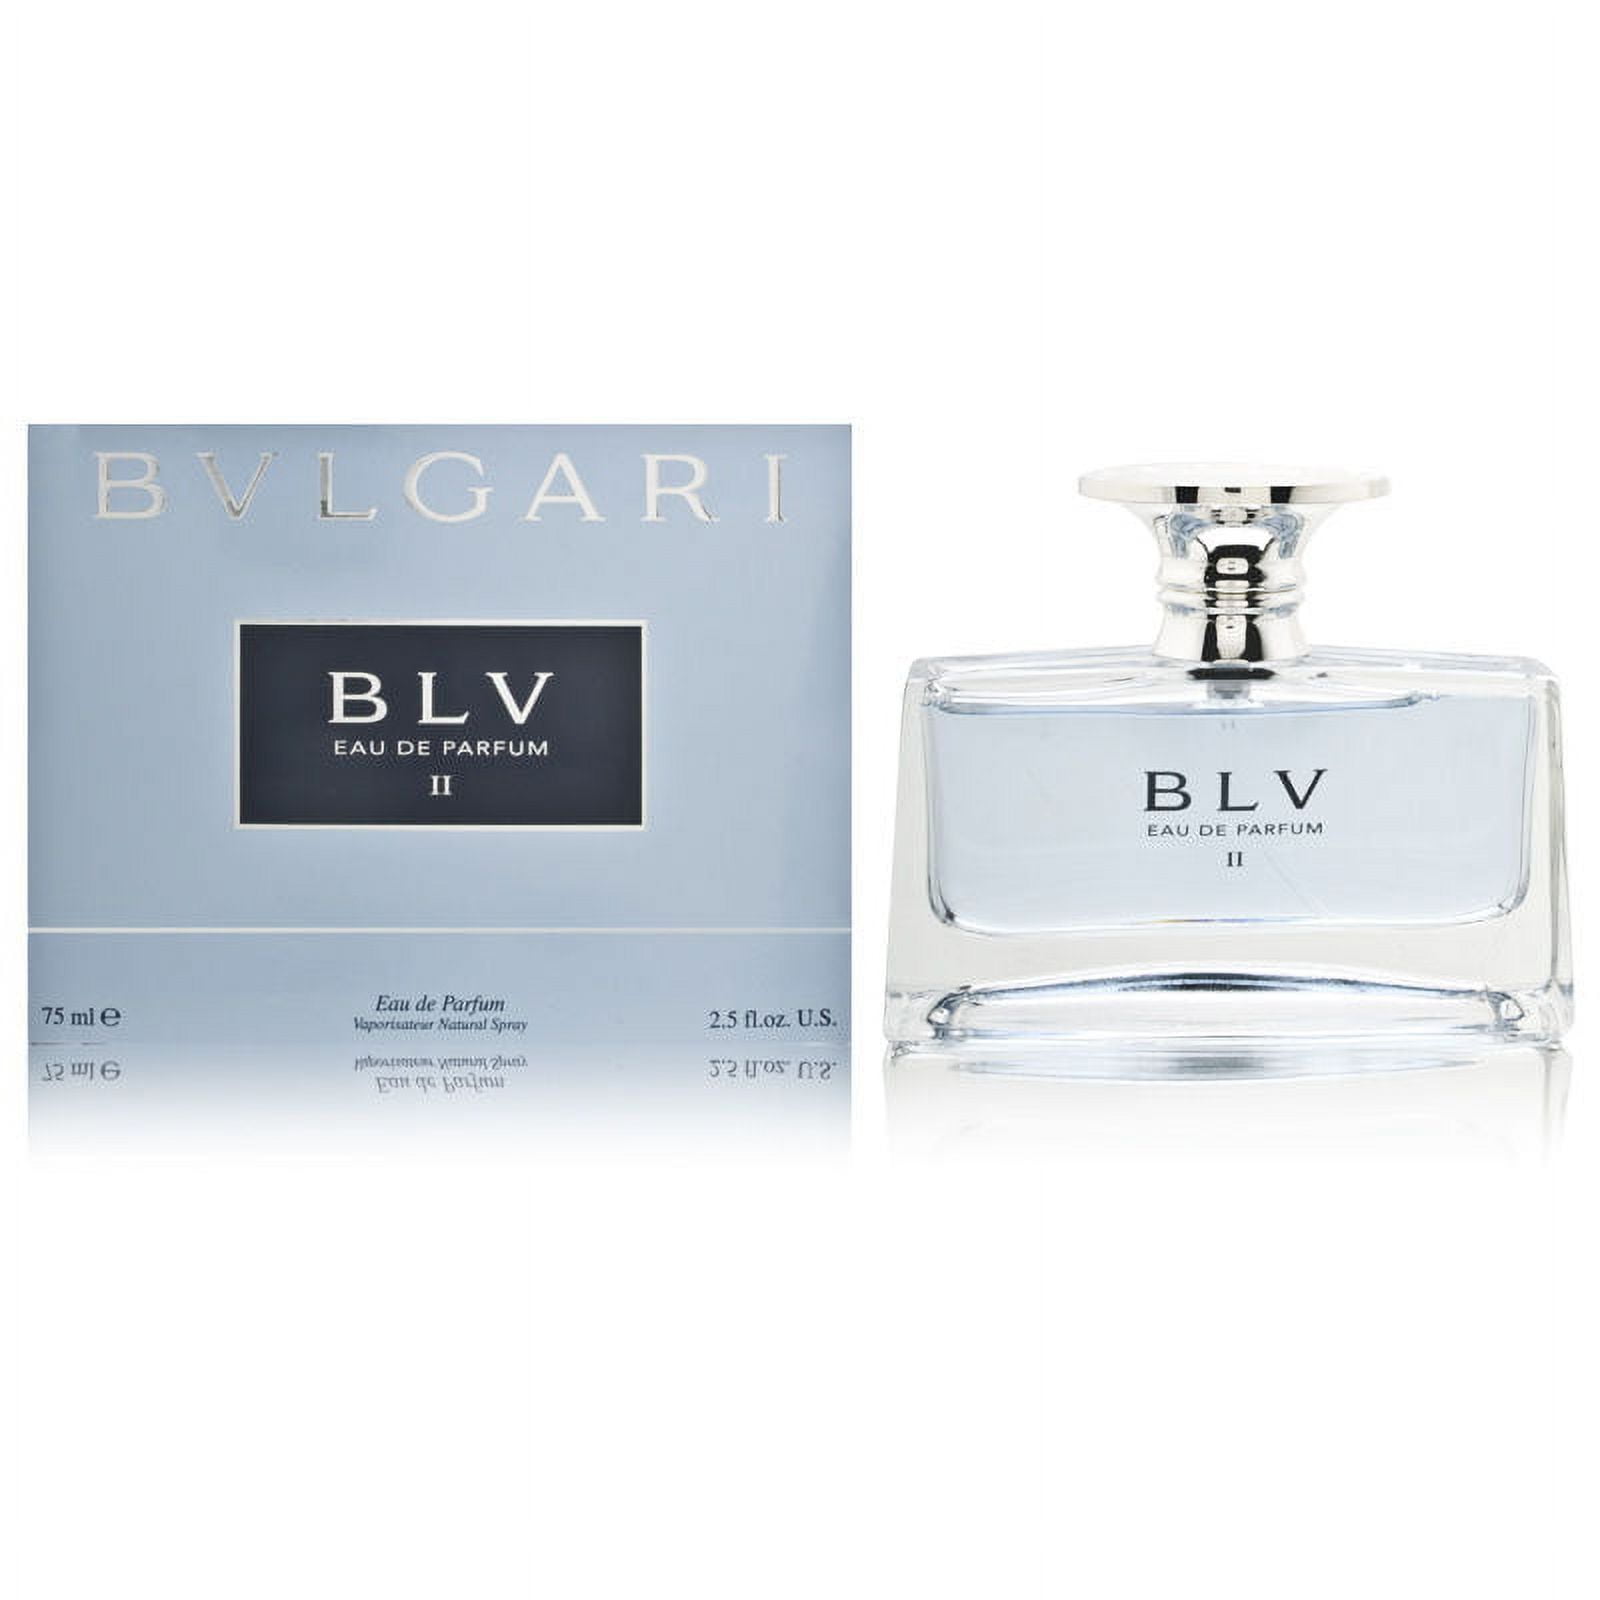 BLV Eau de Parfum II Bvlgari perfume - a fragrance for women 2009